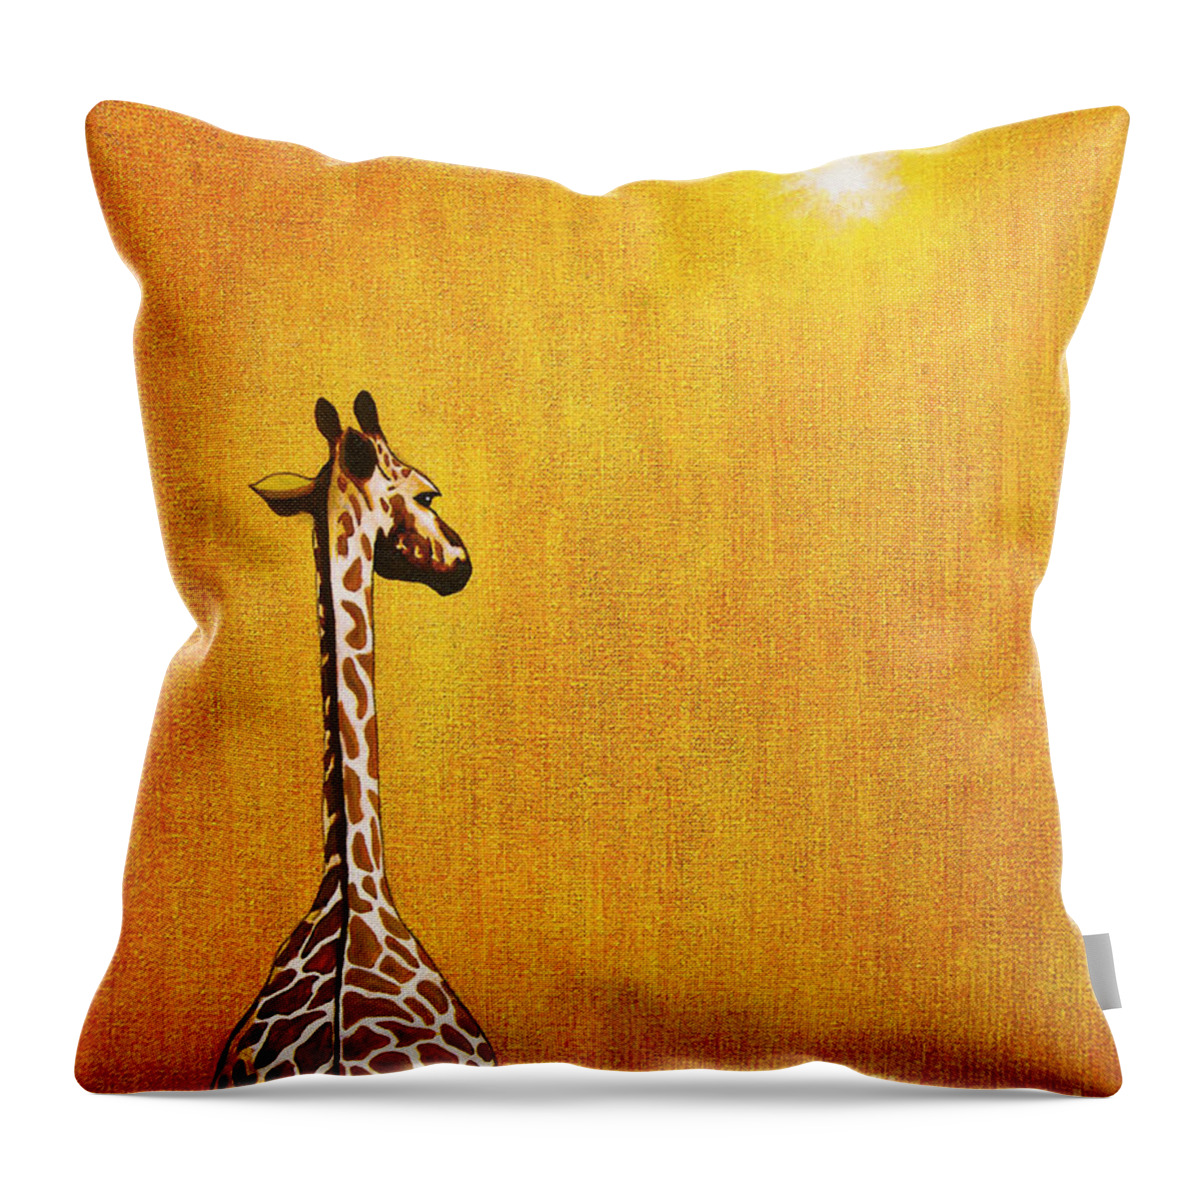 Giraffe Throw Pillow featuring the painting Giraffe Looking Back by Jerome Stumphauzer